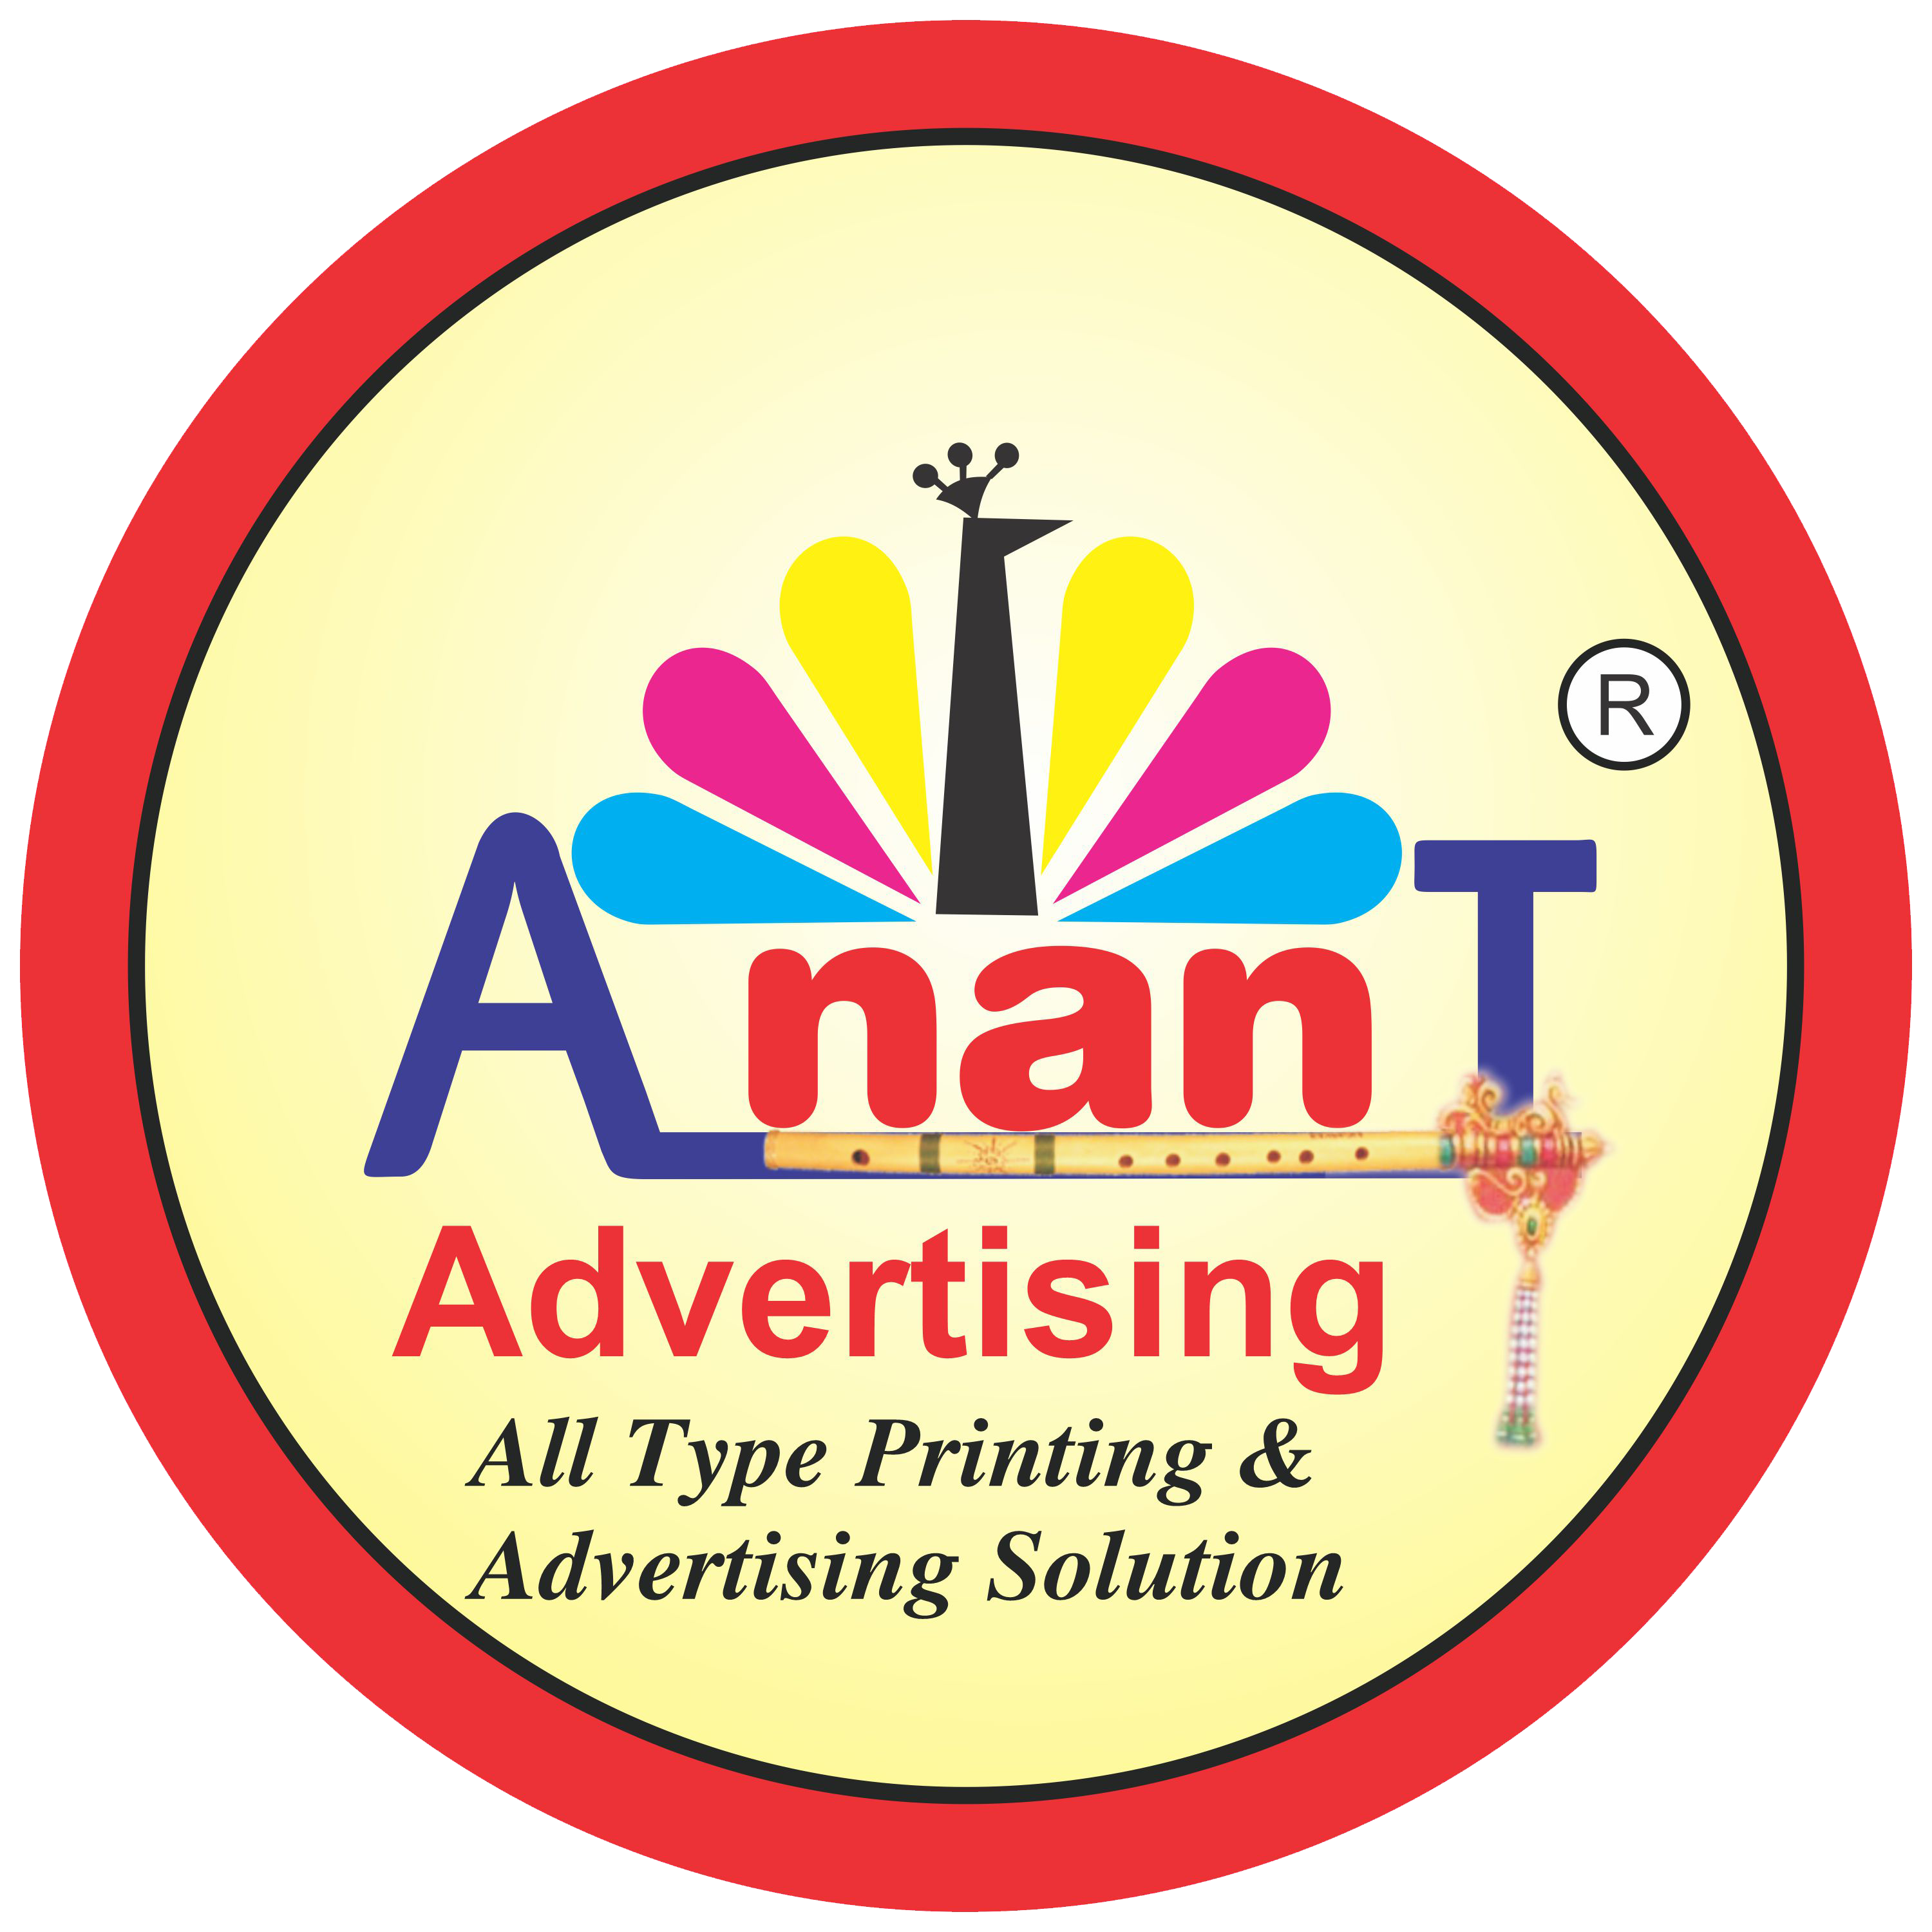 Anant Advertising